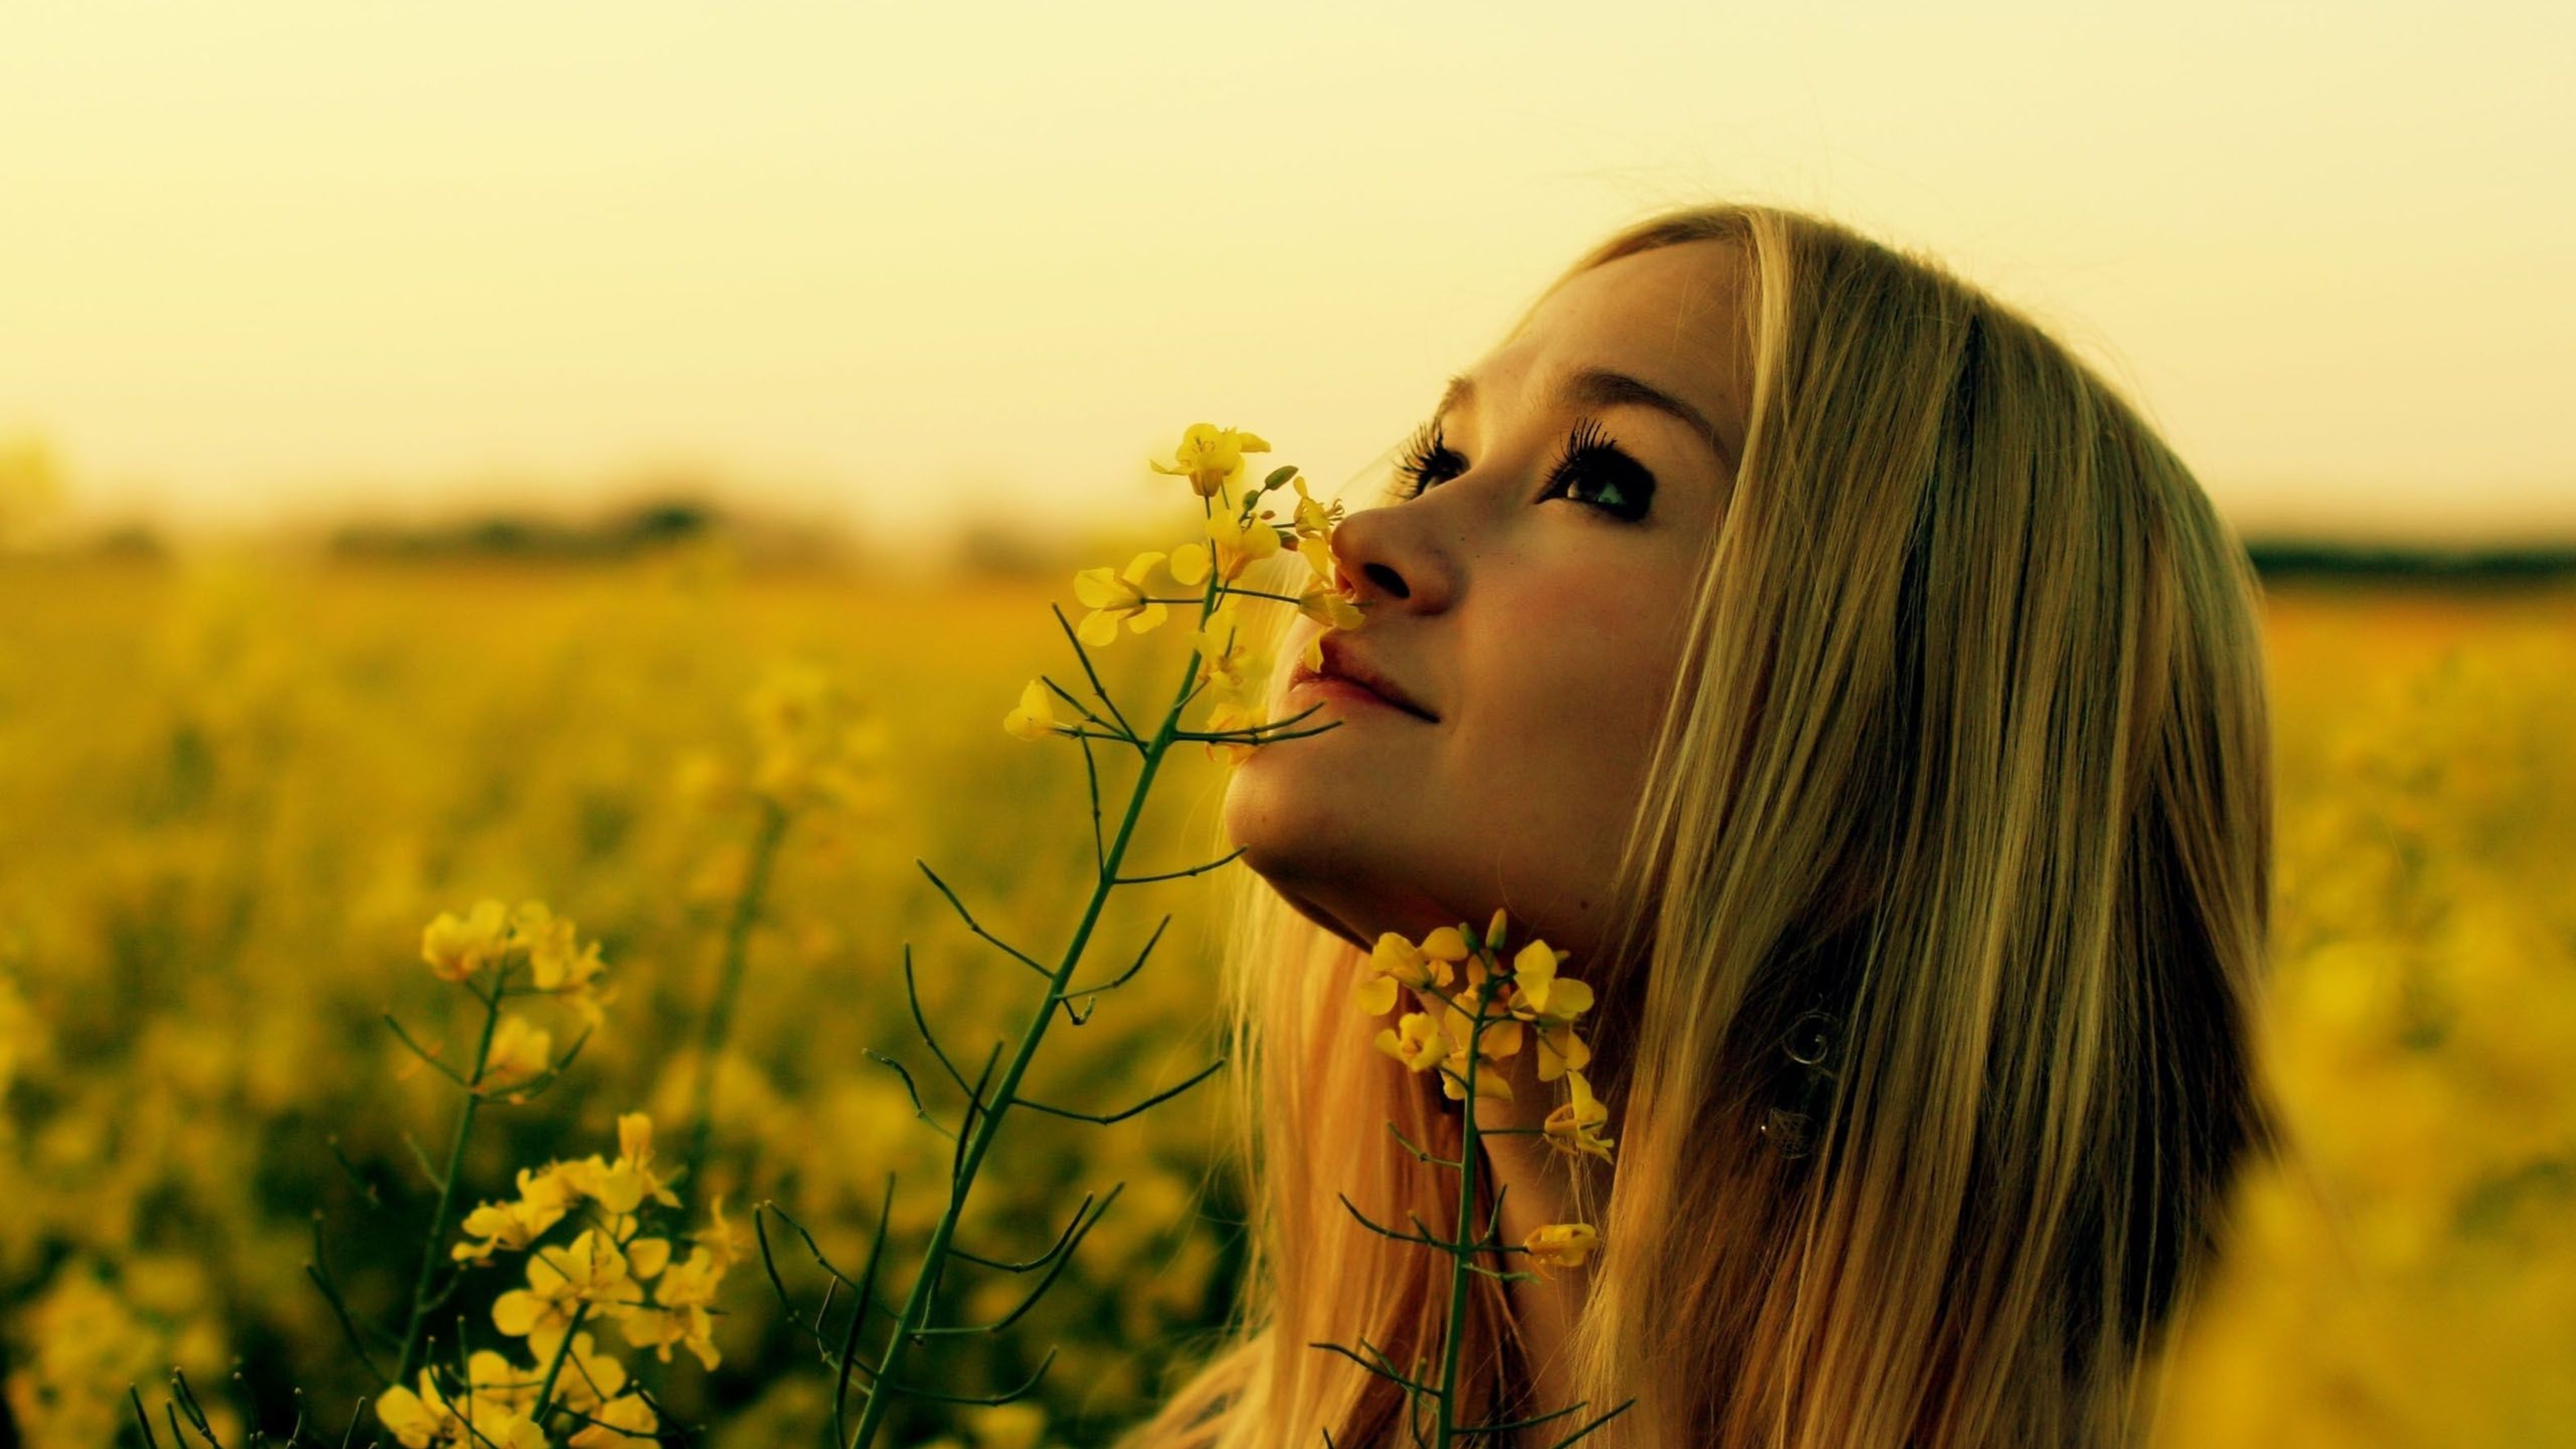 Просто красивые фотки. Девушка лето. Девушка в поле. Девушка в цветочном поле. Девушка на природе.